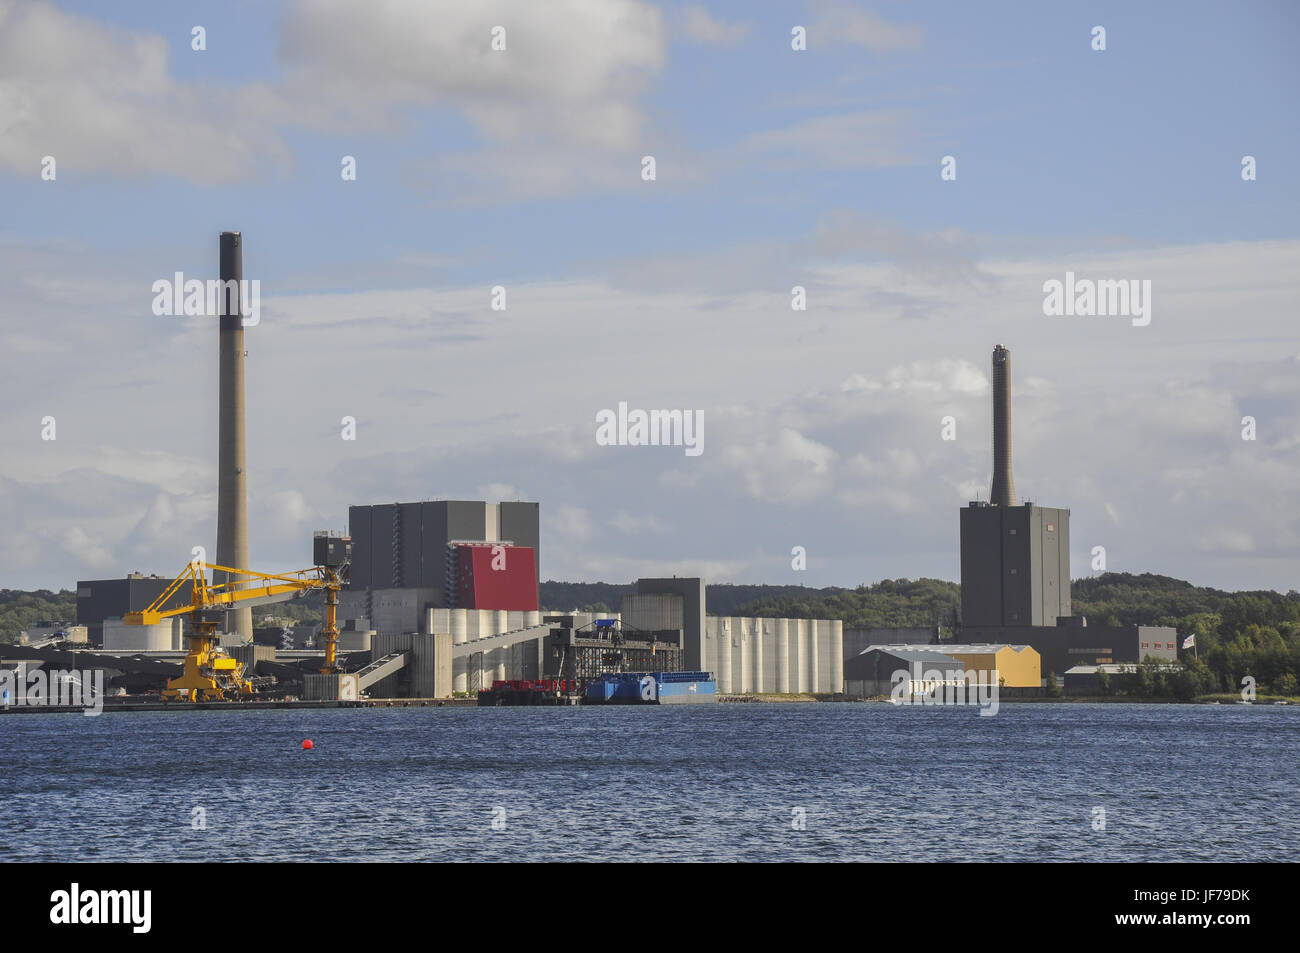 Maritime industry in Aabenra, Danmark Stock Photo